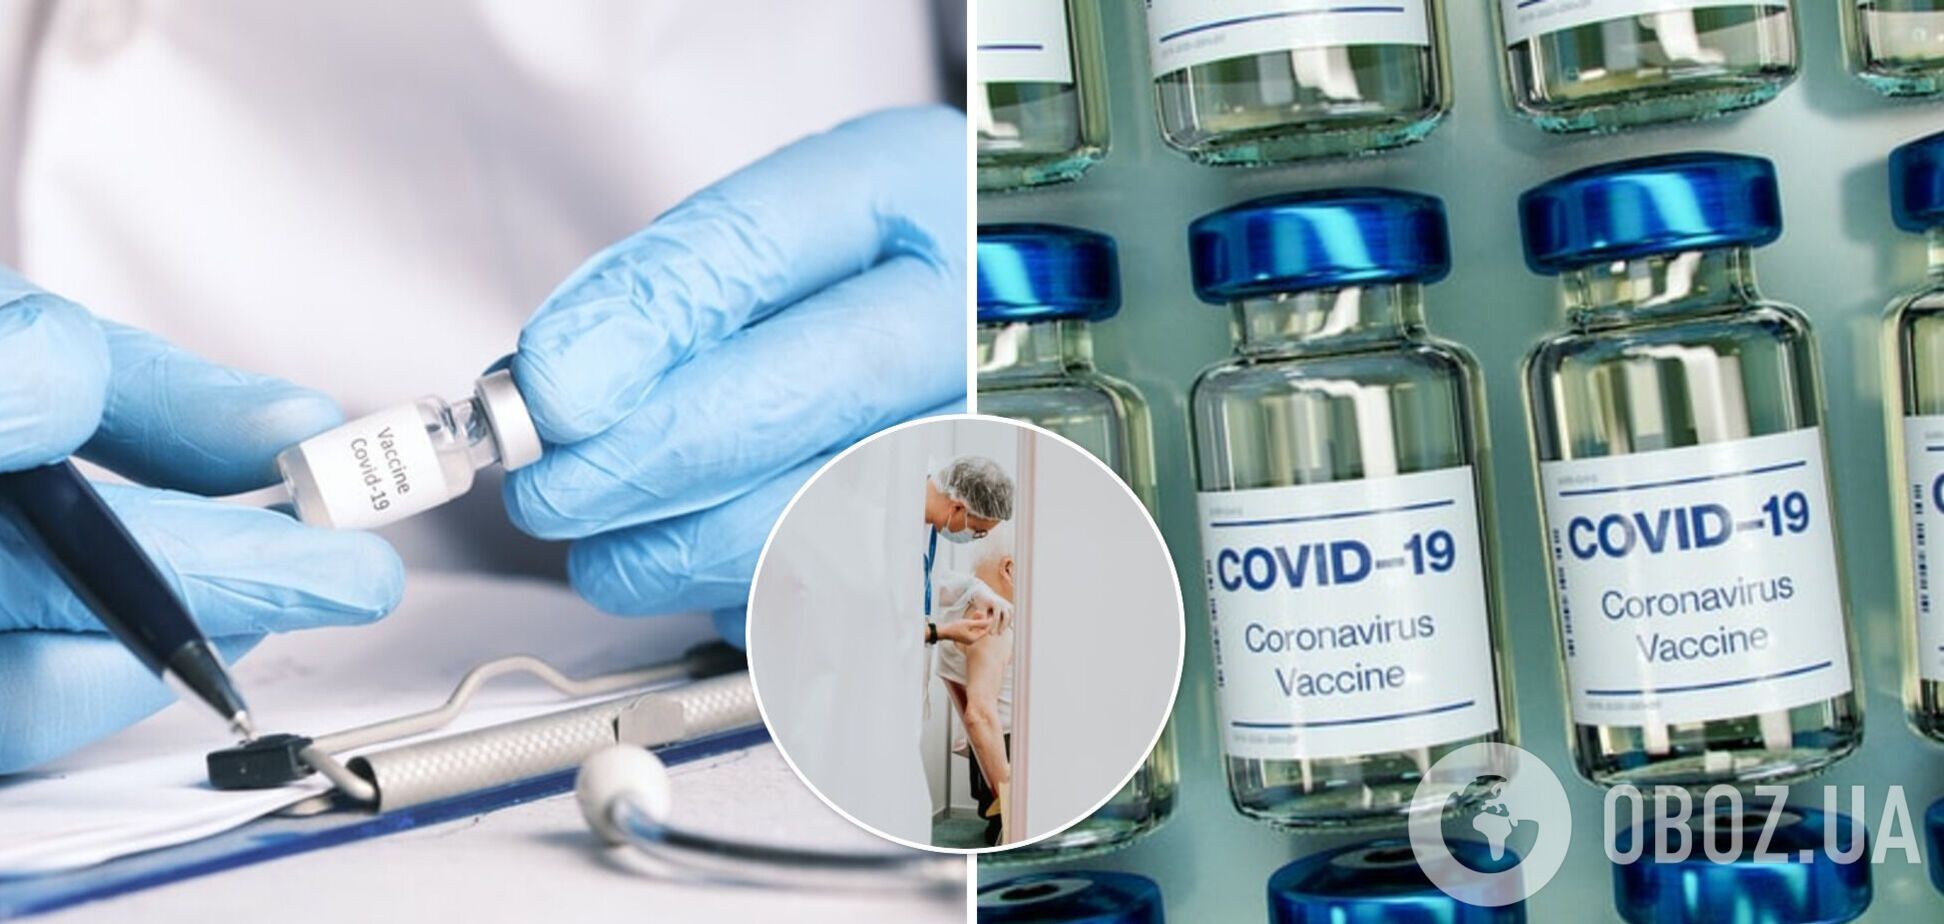 Вакцинация от COVID-19 снижает риск госпитализации в 15 раз: результаты исследования